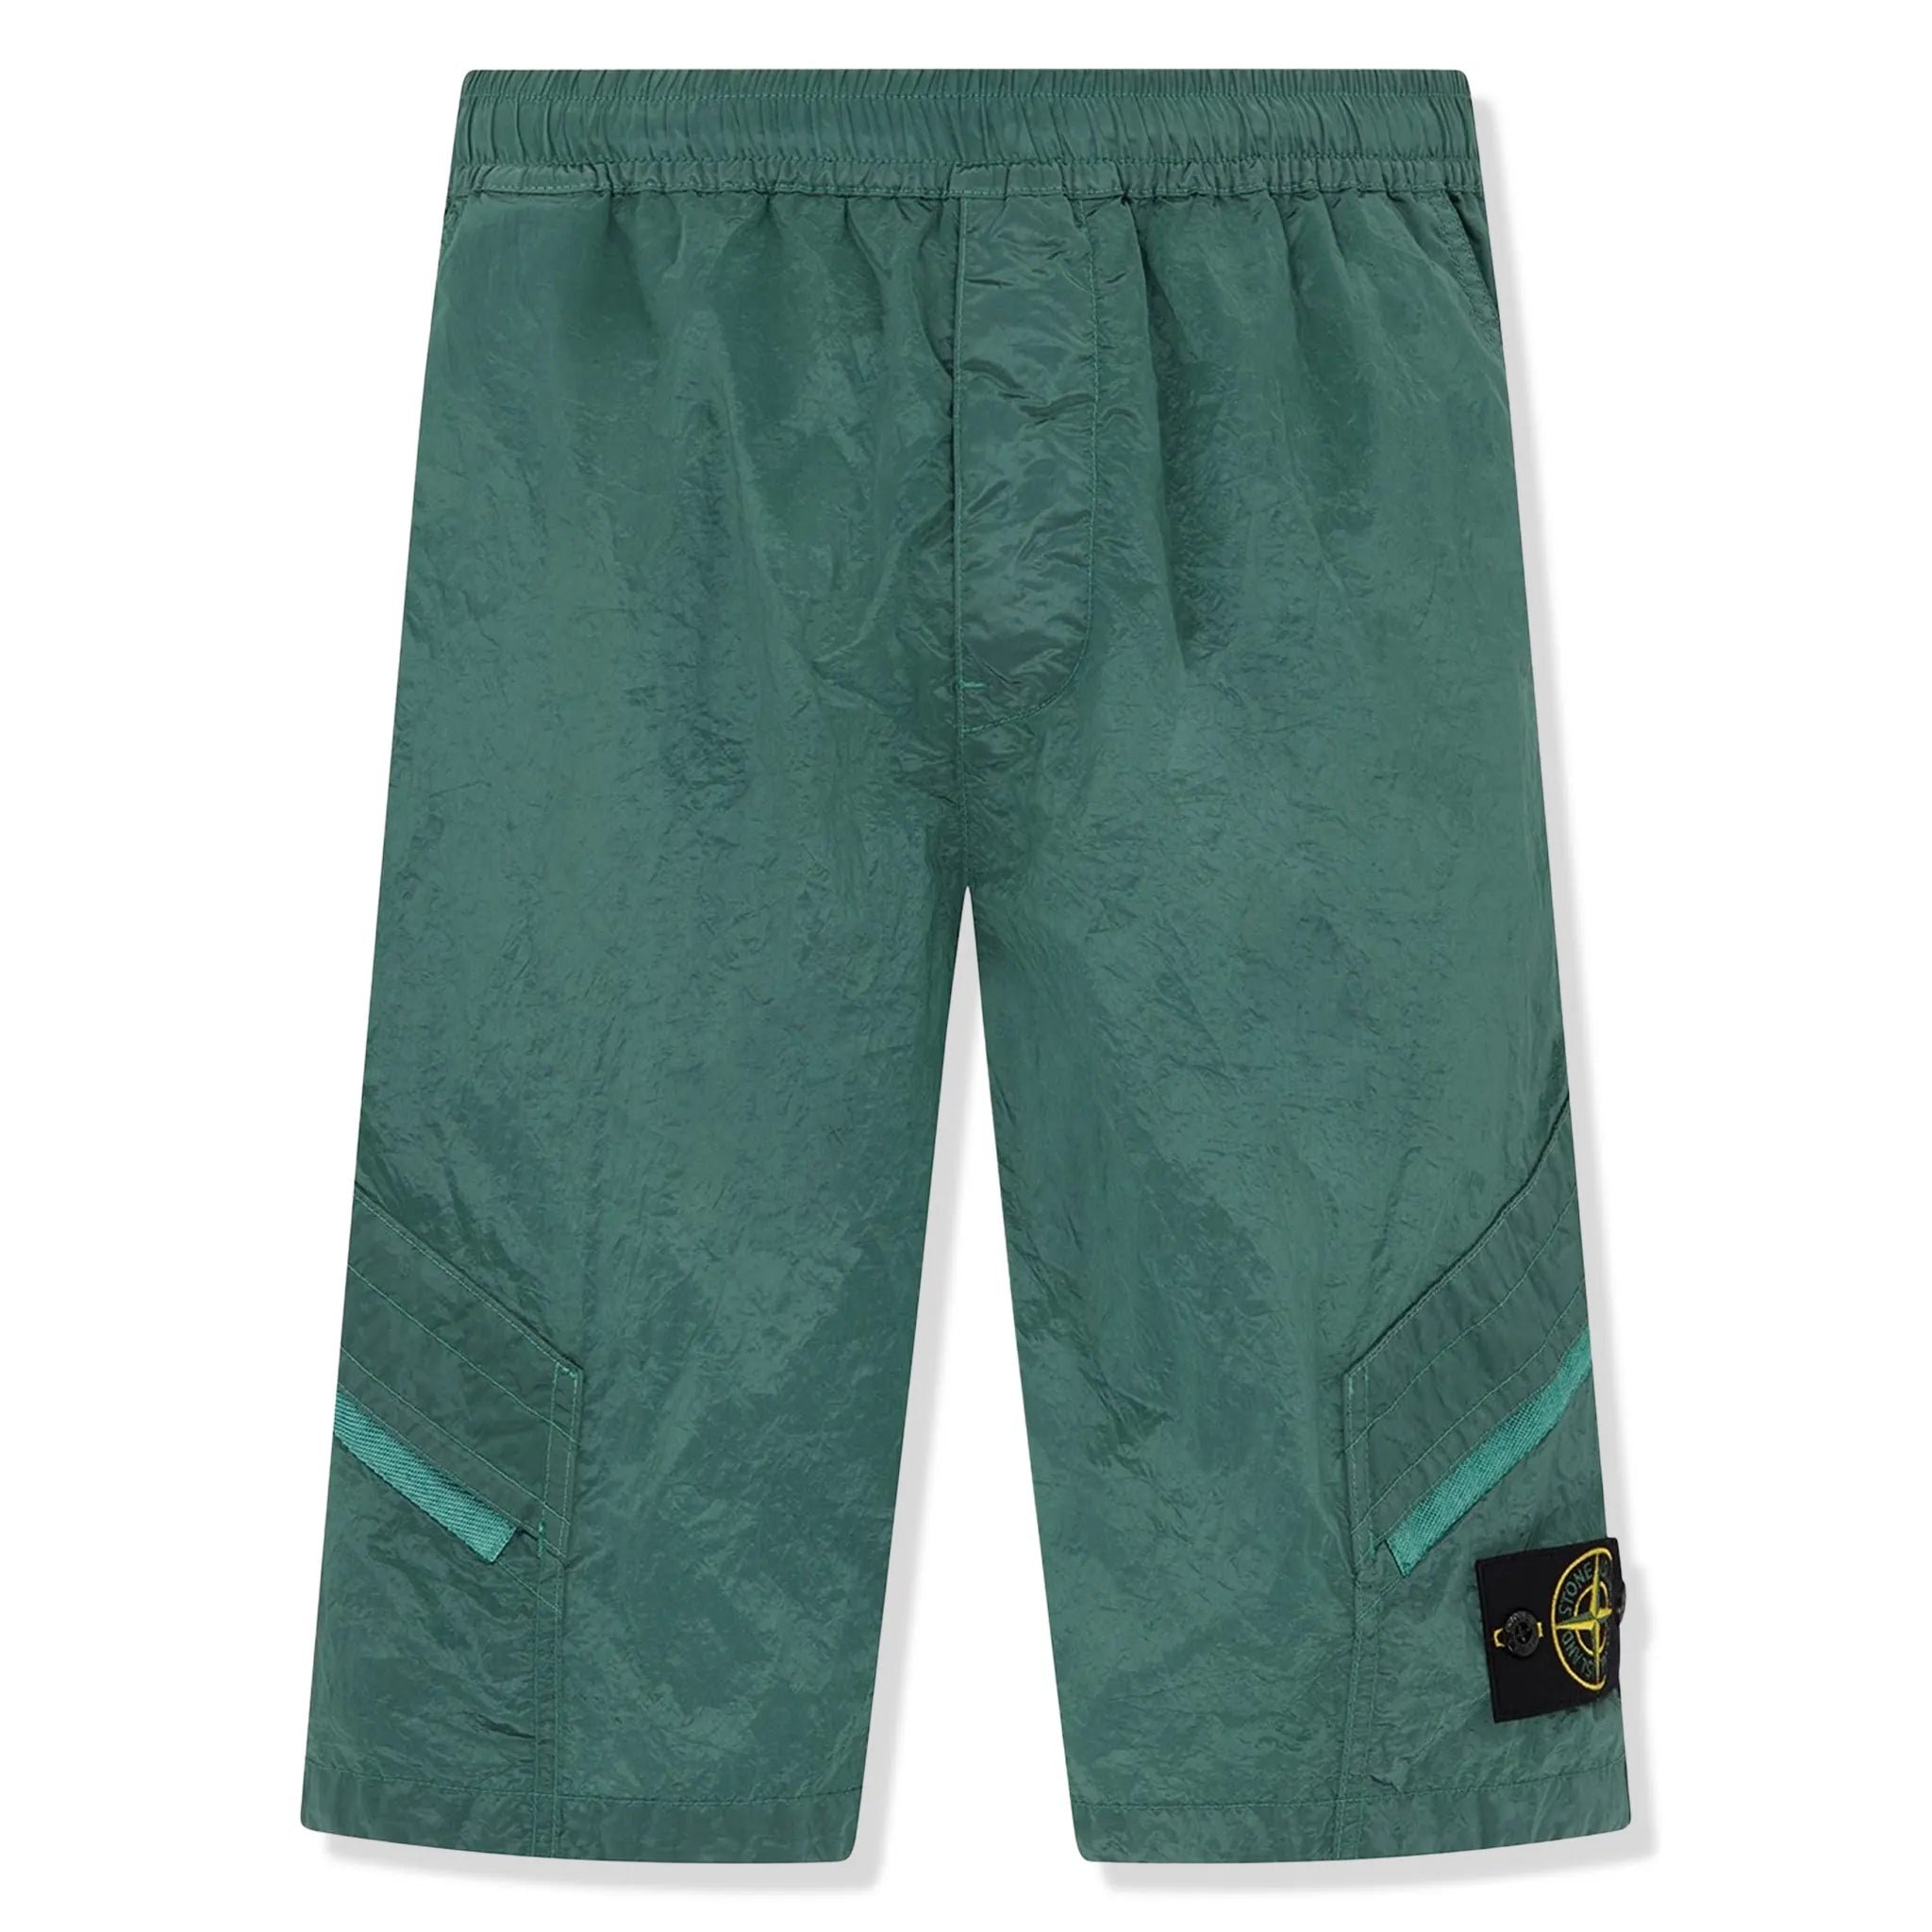 Front view of Stone Island Nylon Metal Dark Green Shorts